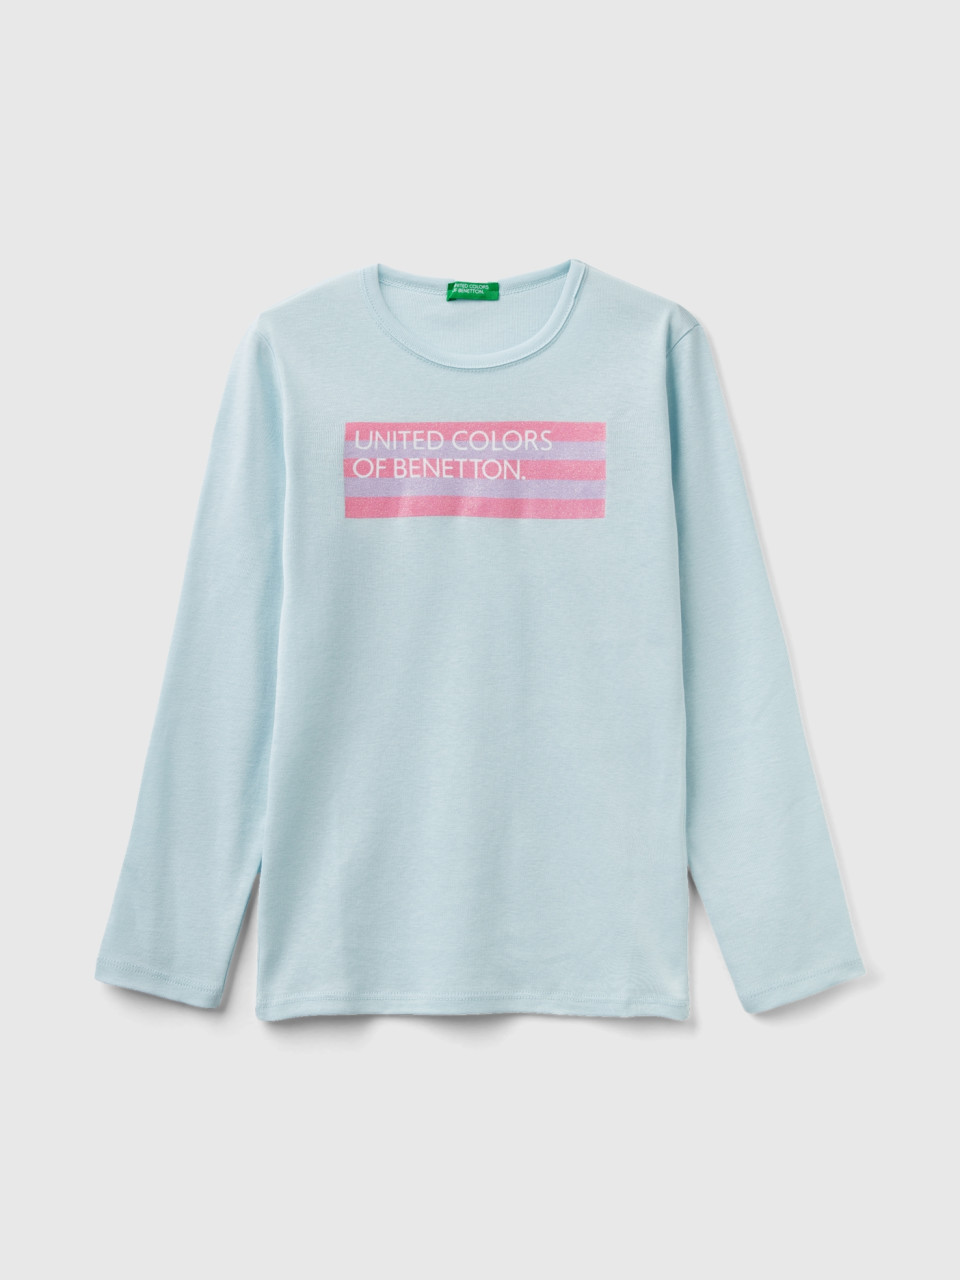 Benetton, Long Sleeve T-shirt With Glitter Print, Aqua, Kids